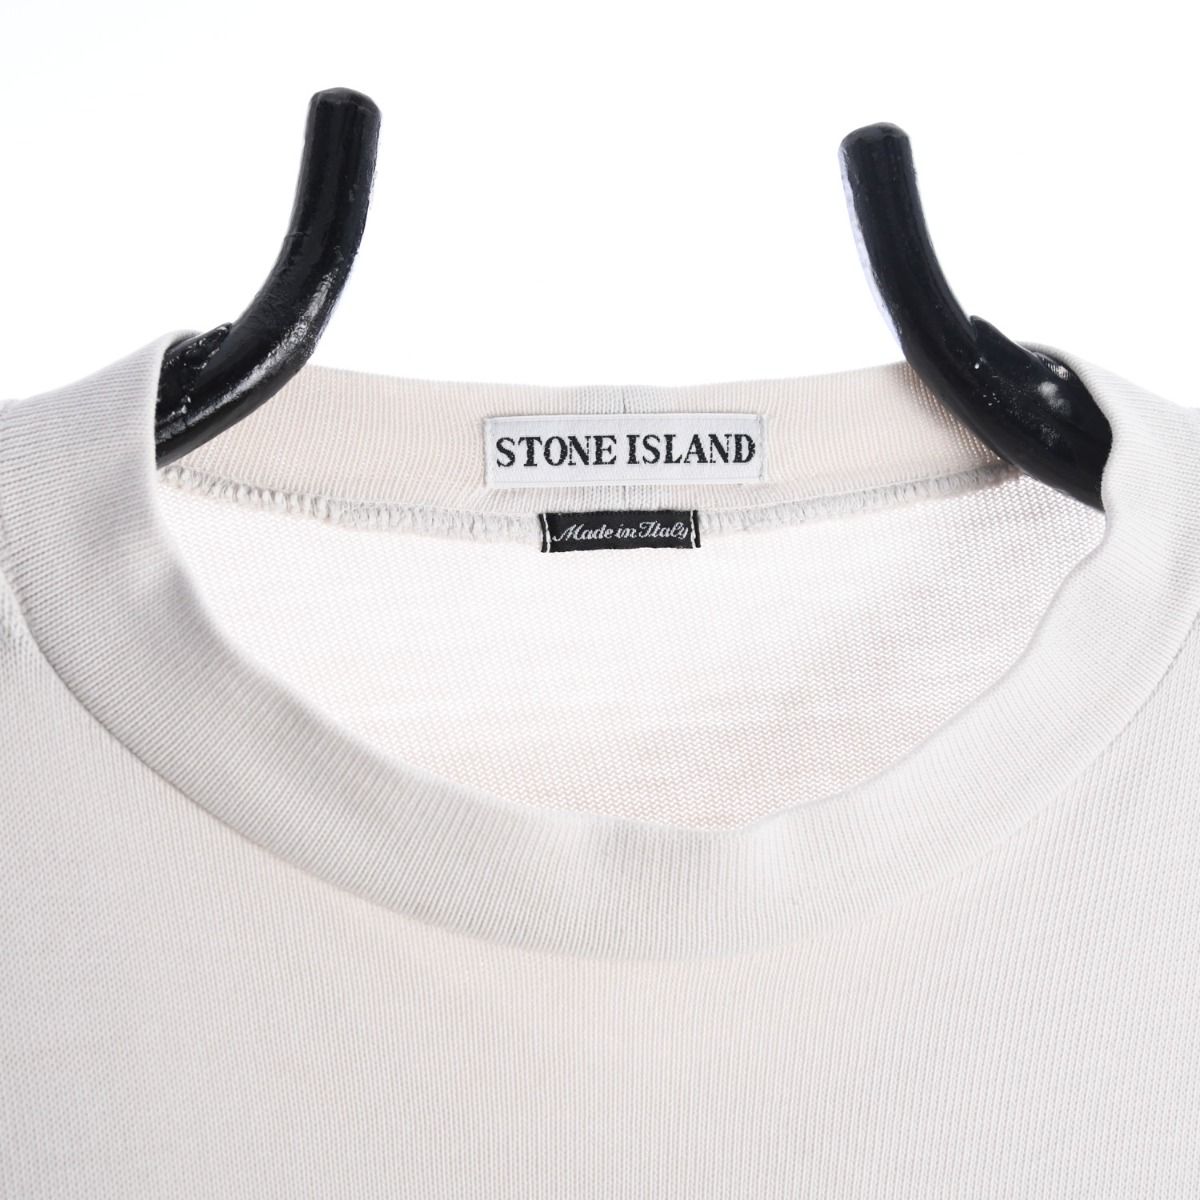 Stone Island SS 2000 Sweatshirt